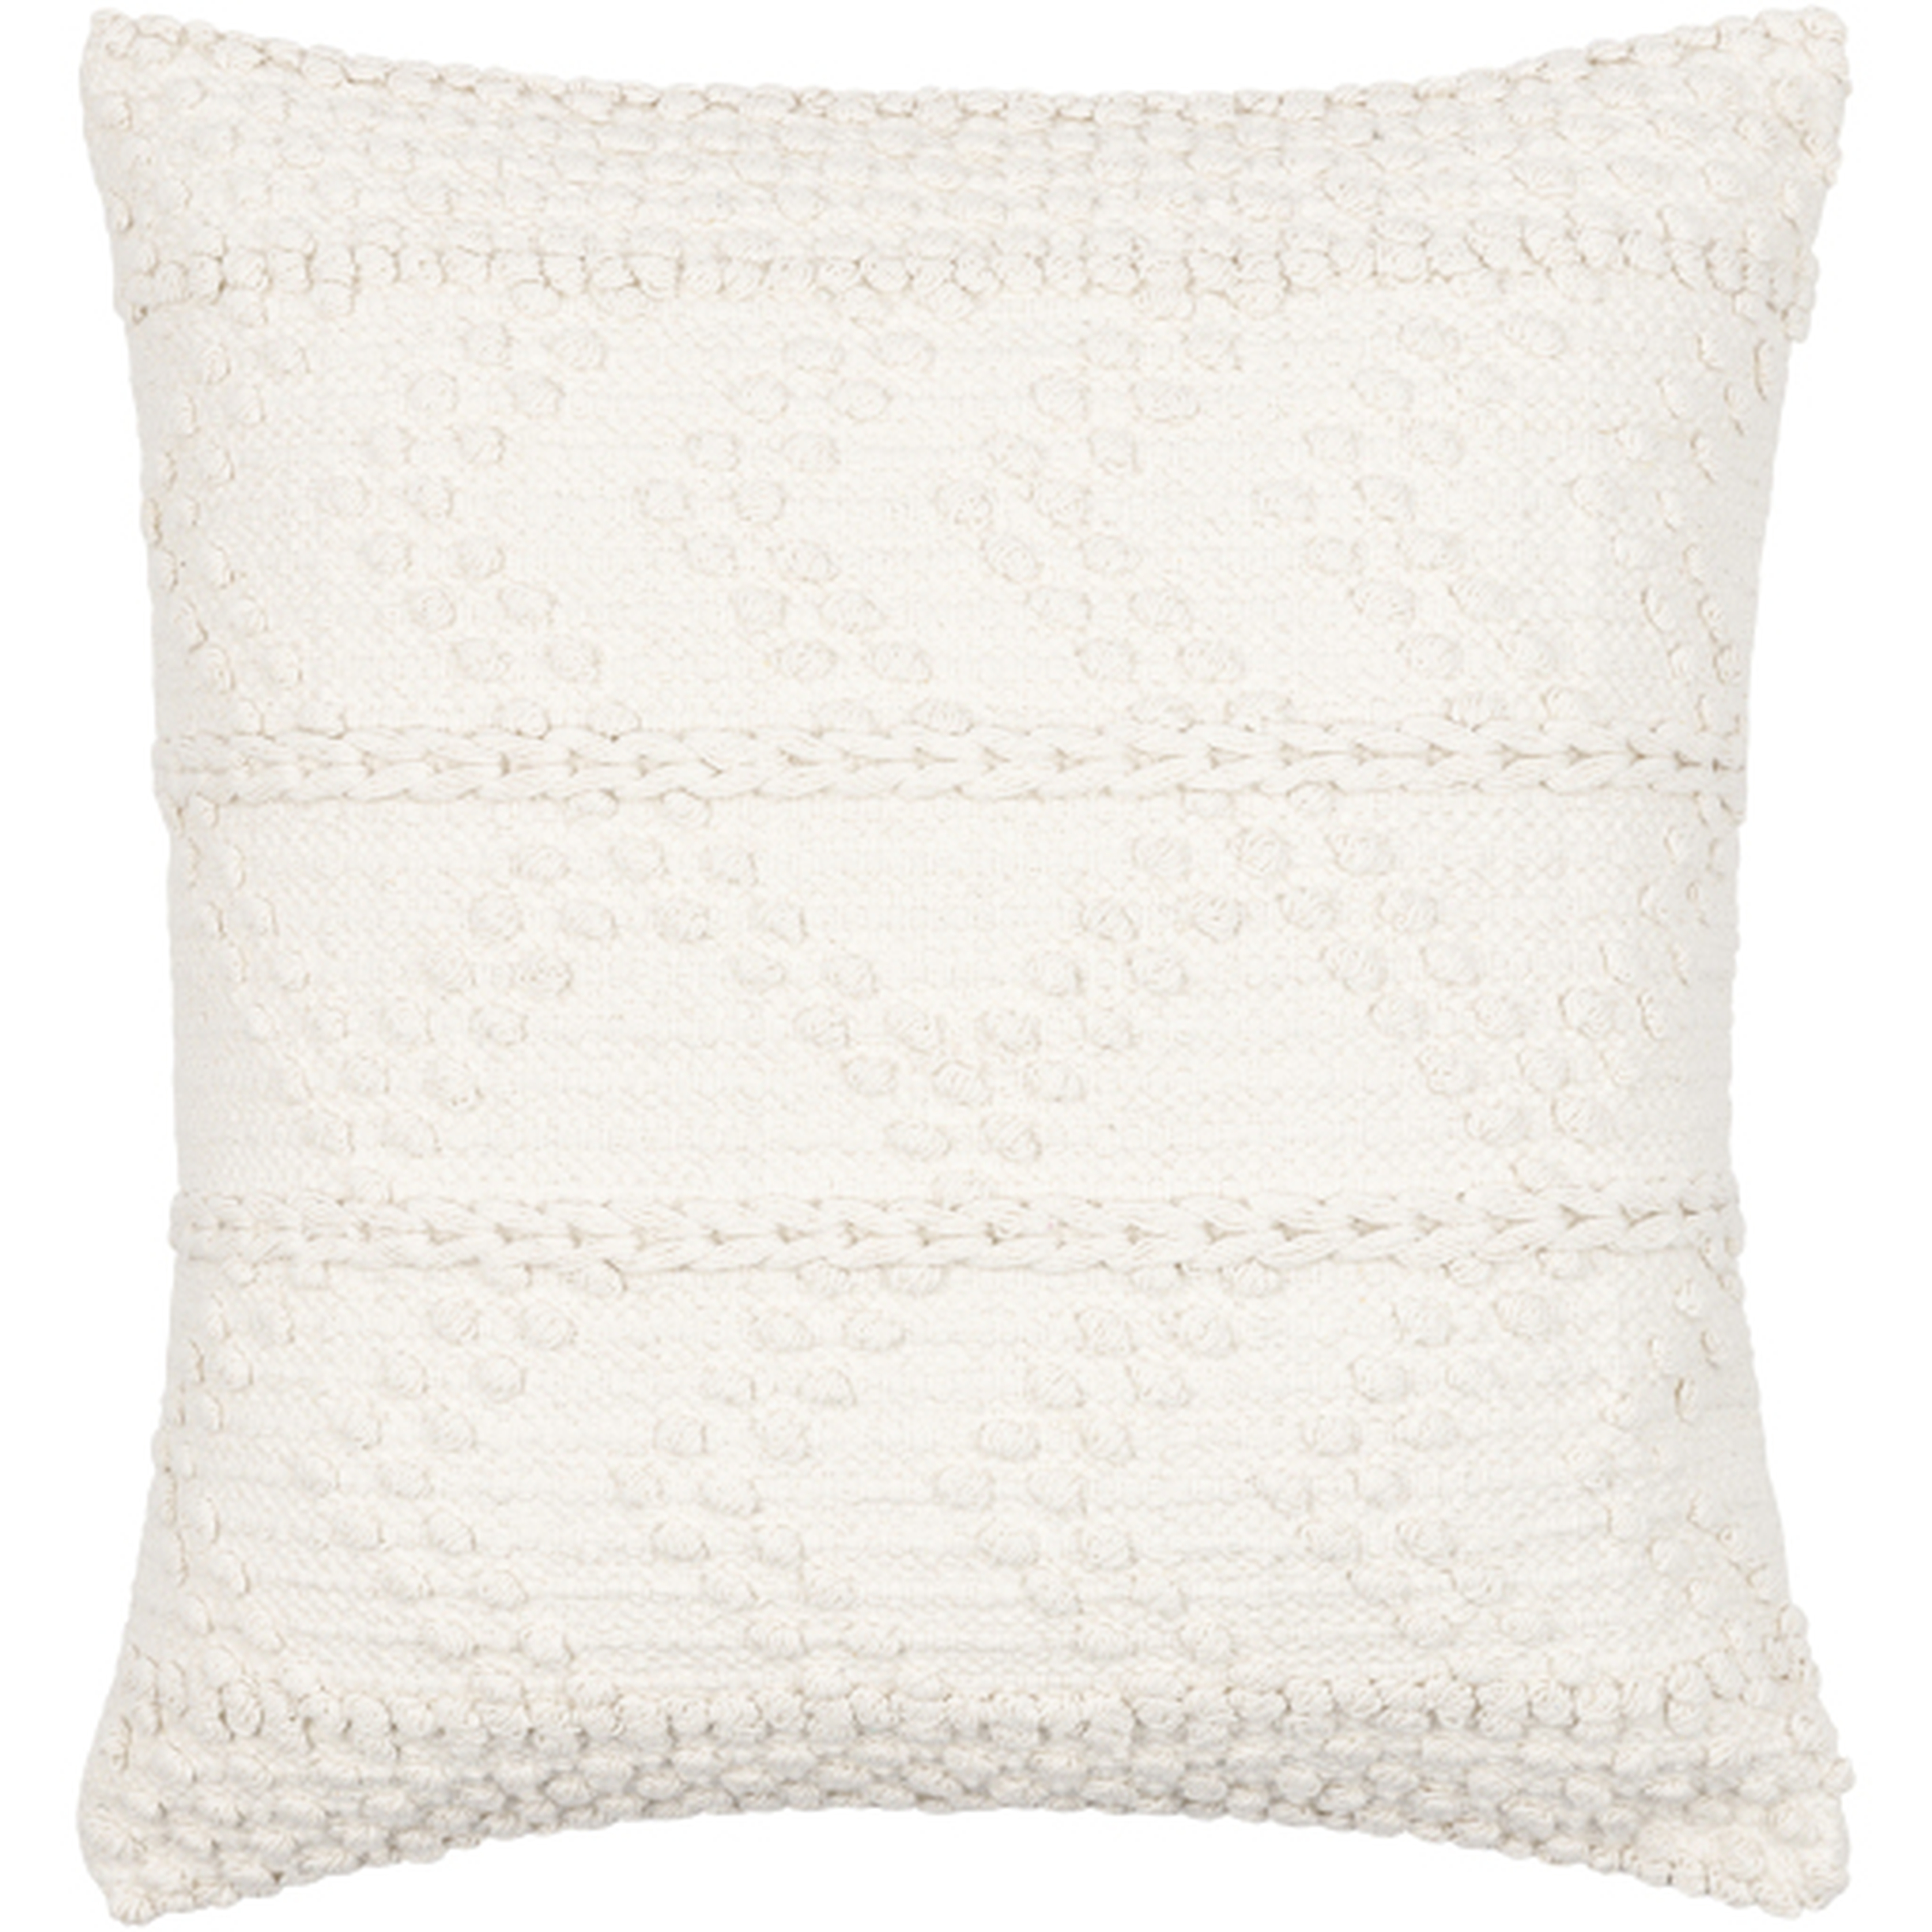 Merdo Throw Pillow, 22" x 22", with down insert - Surya